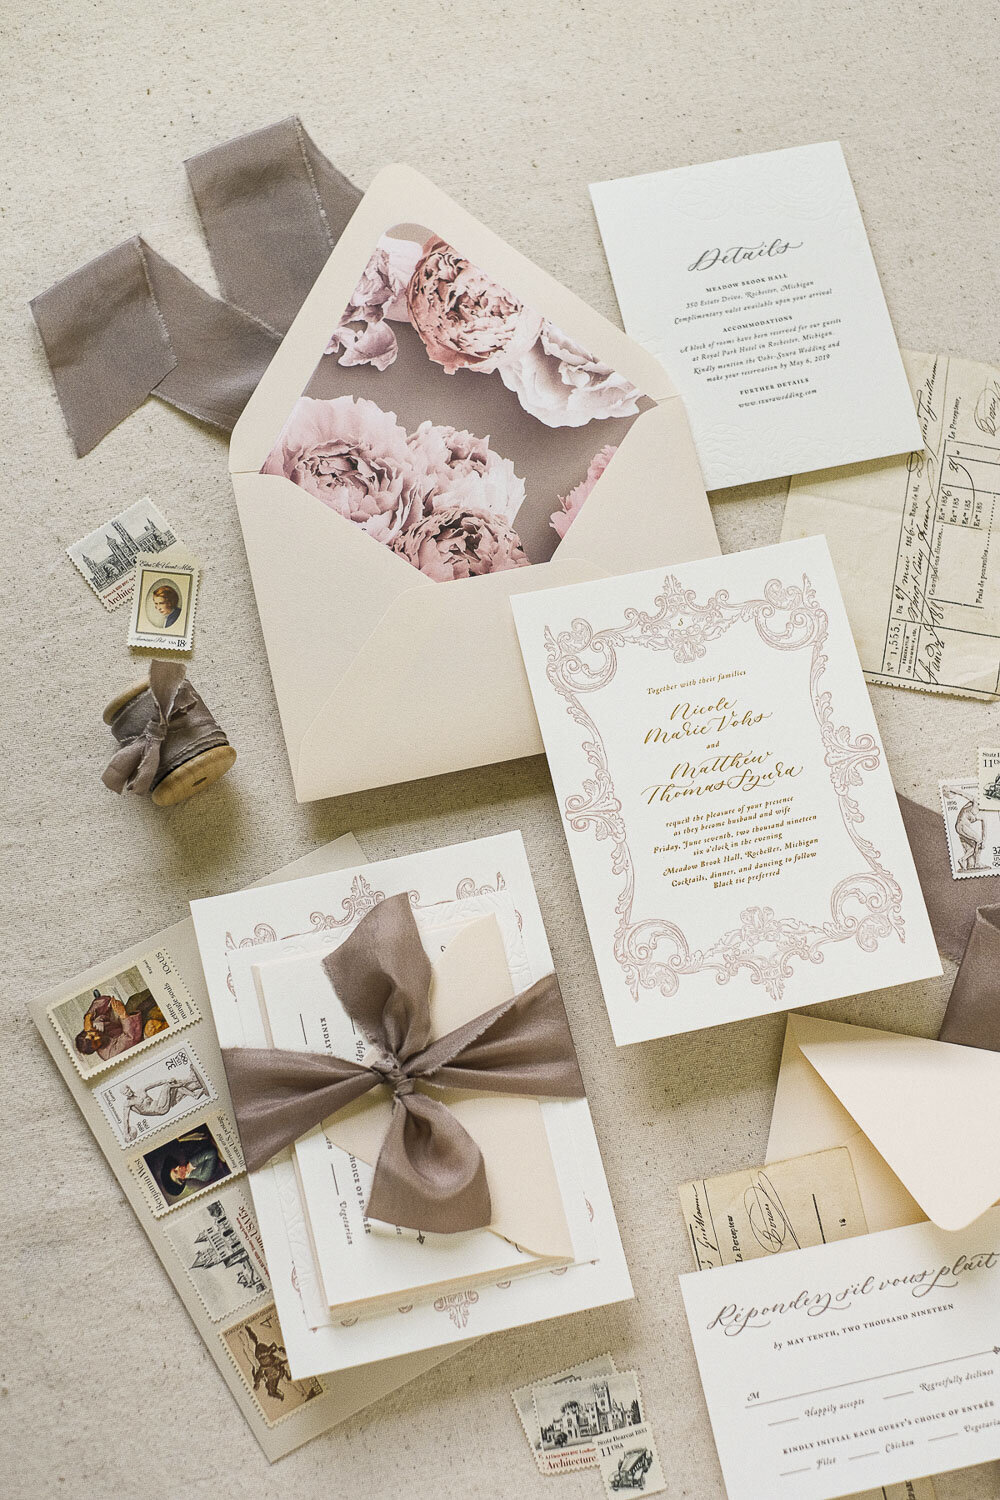 michigan-letterpress-wedding-invitations-custom-invites-save-dates-paper-honey-10